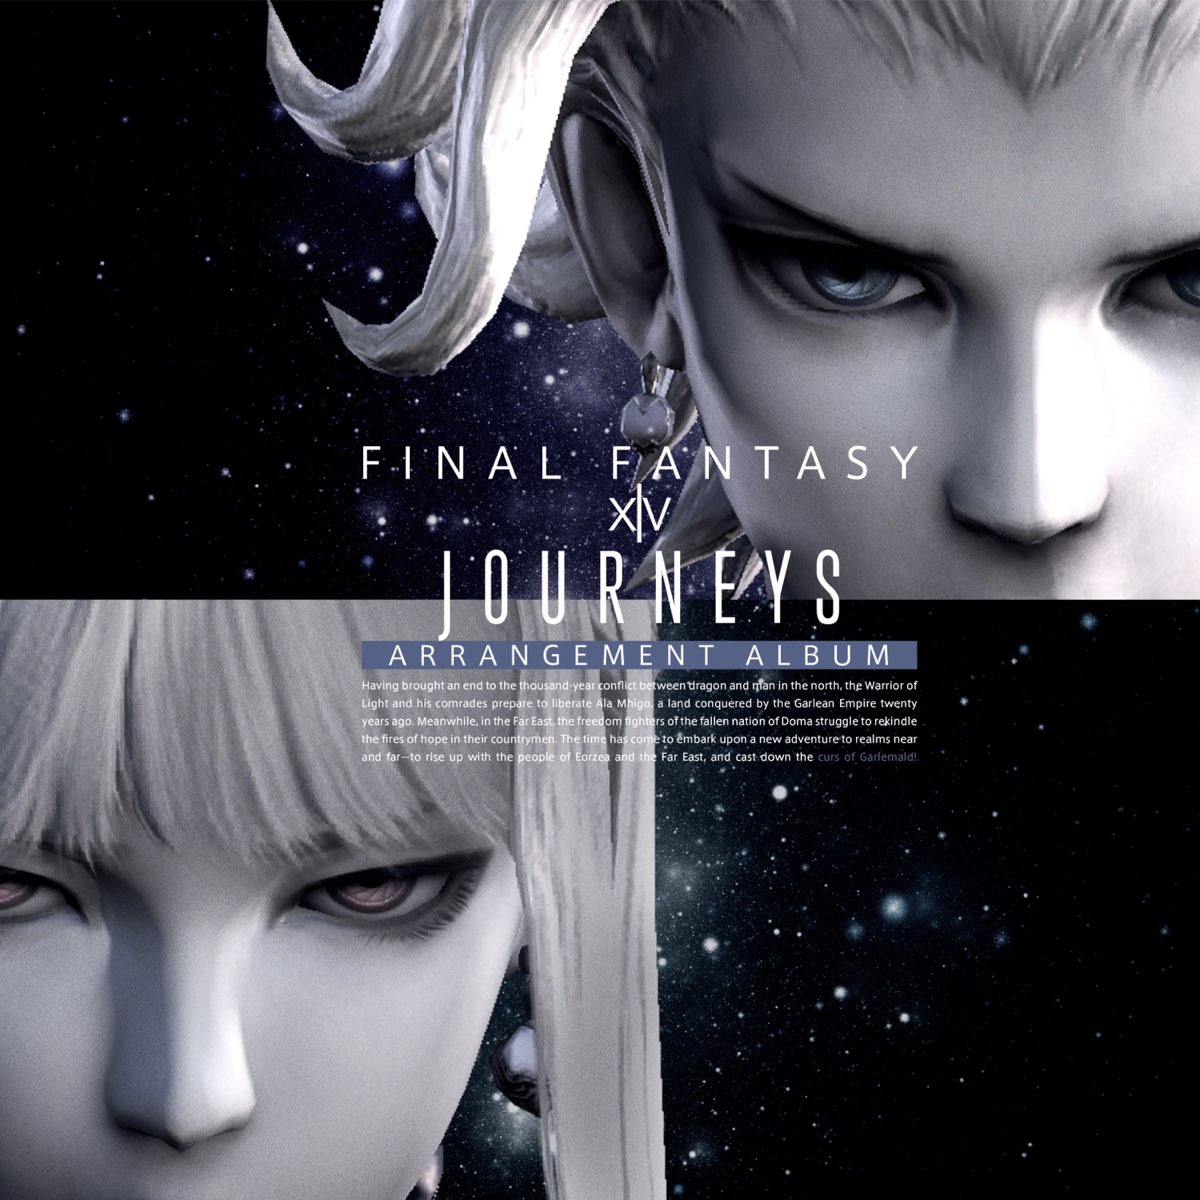 The Primals Keikoの Journeys Final Fantasy Xiv Arrangement Album をapple Musicで